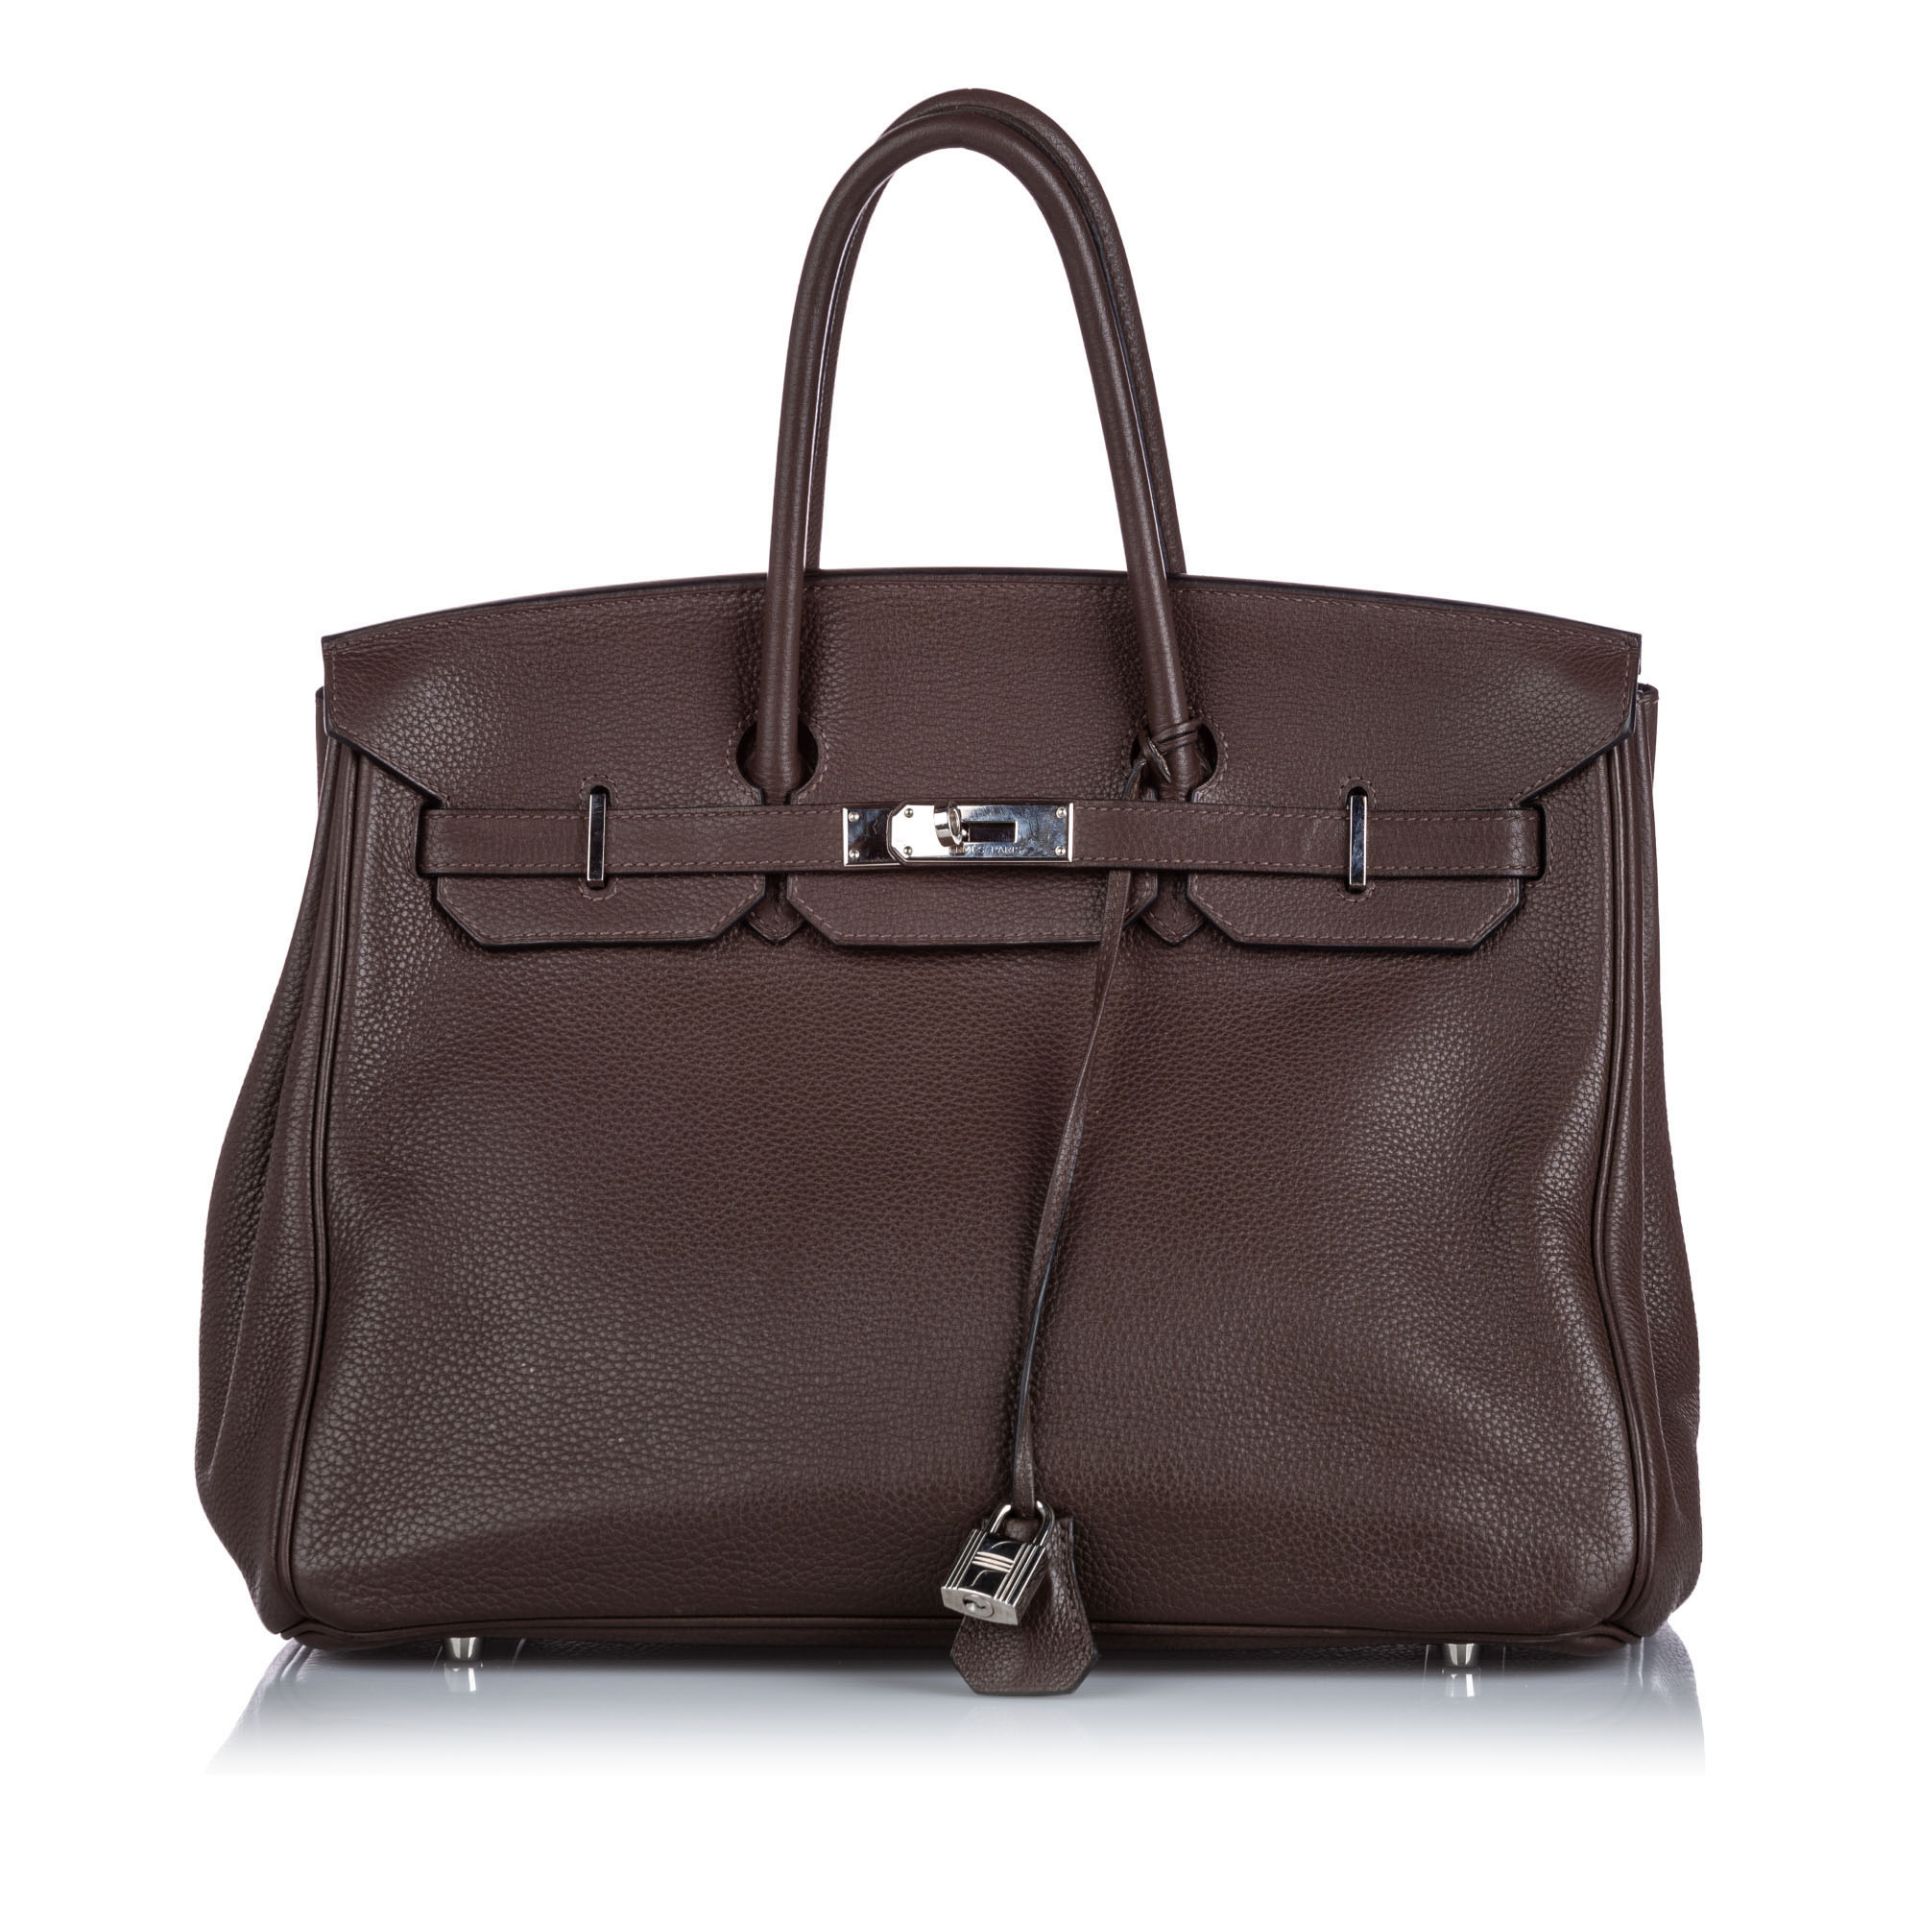 Hermes Togo Birkin 35 Handbag